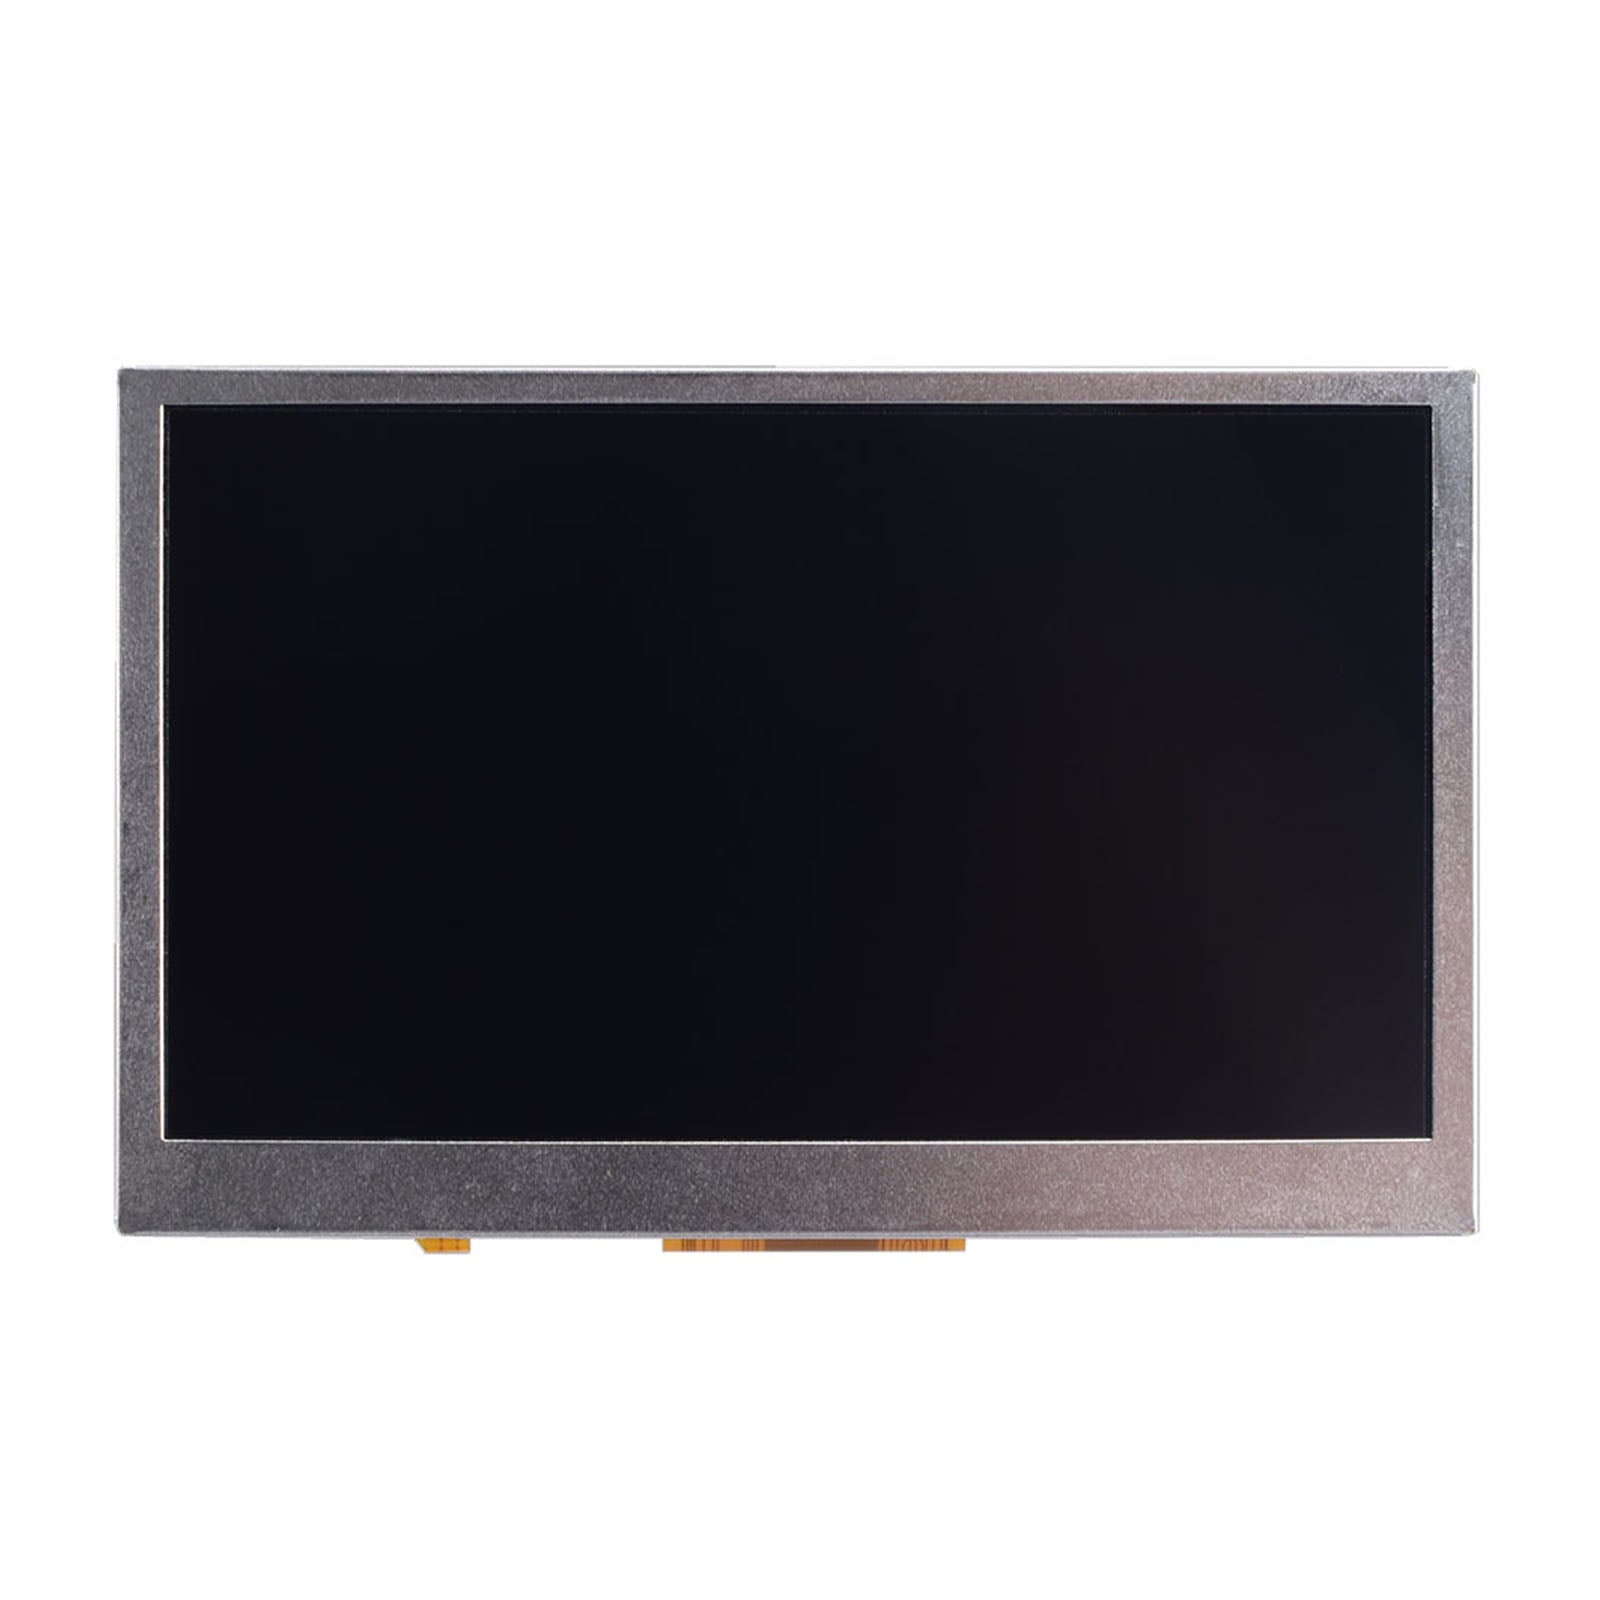 4.3-inch high brightness IPS display panel with 480x272 resolution, using RGB interface